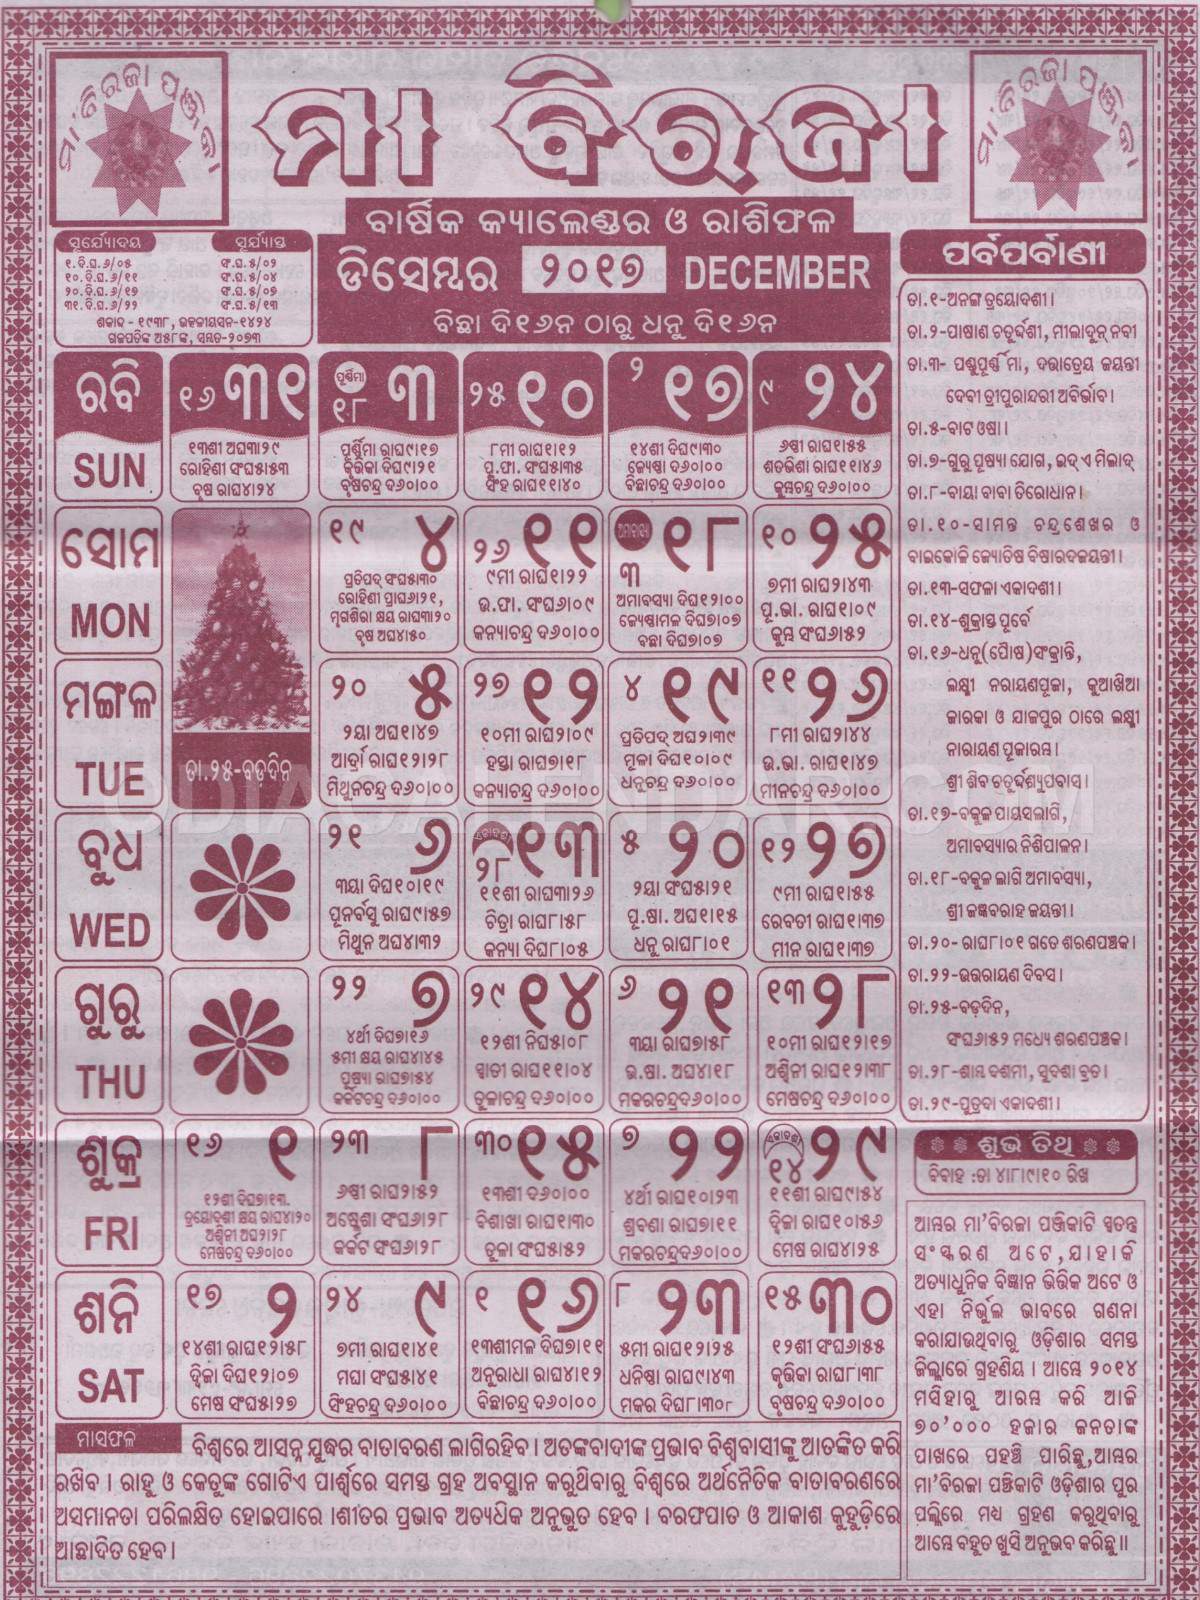 Biraja December 2017 Image